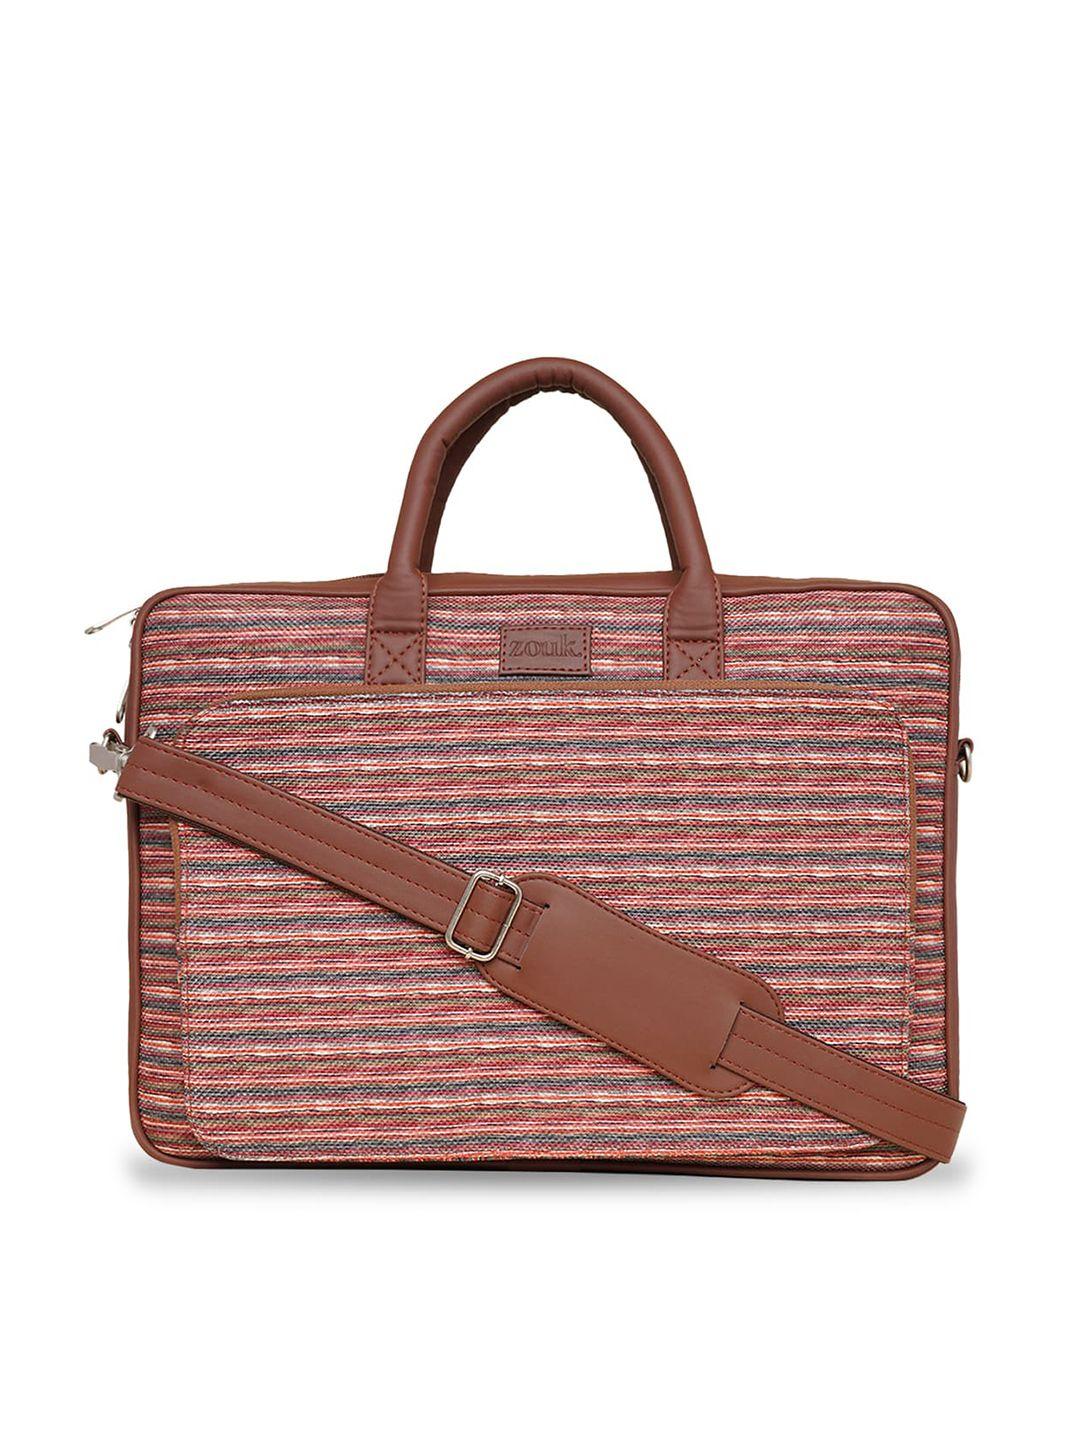 zouk unisex red & brown striped laptop bag